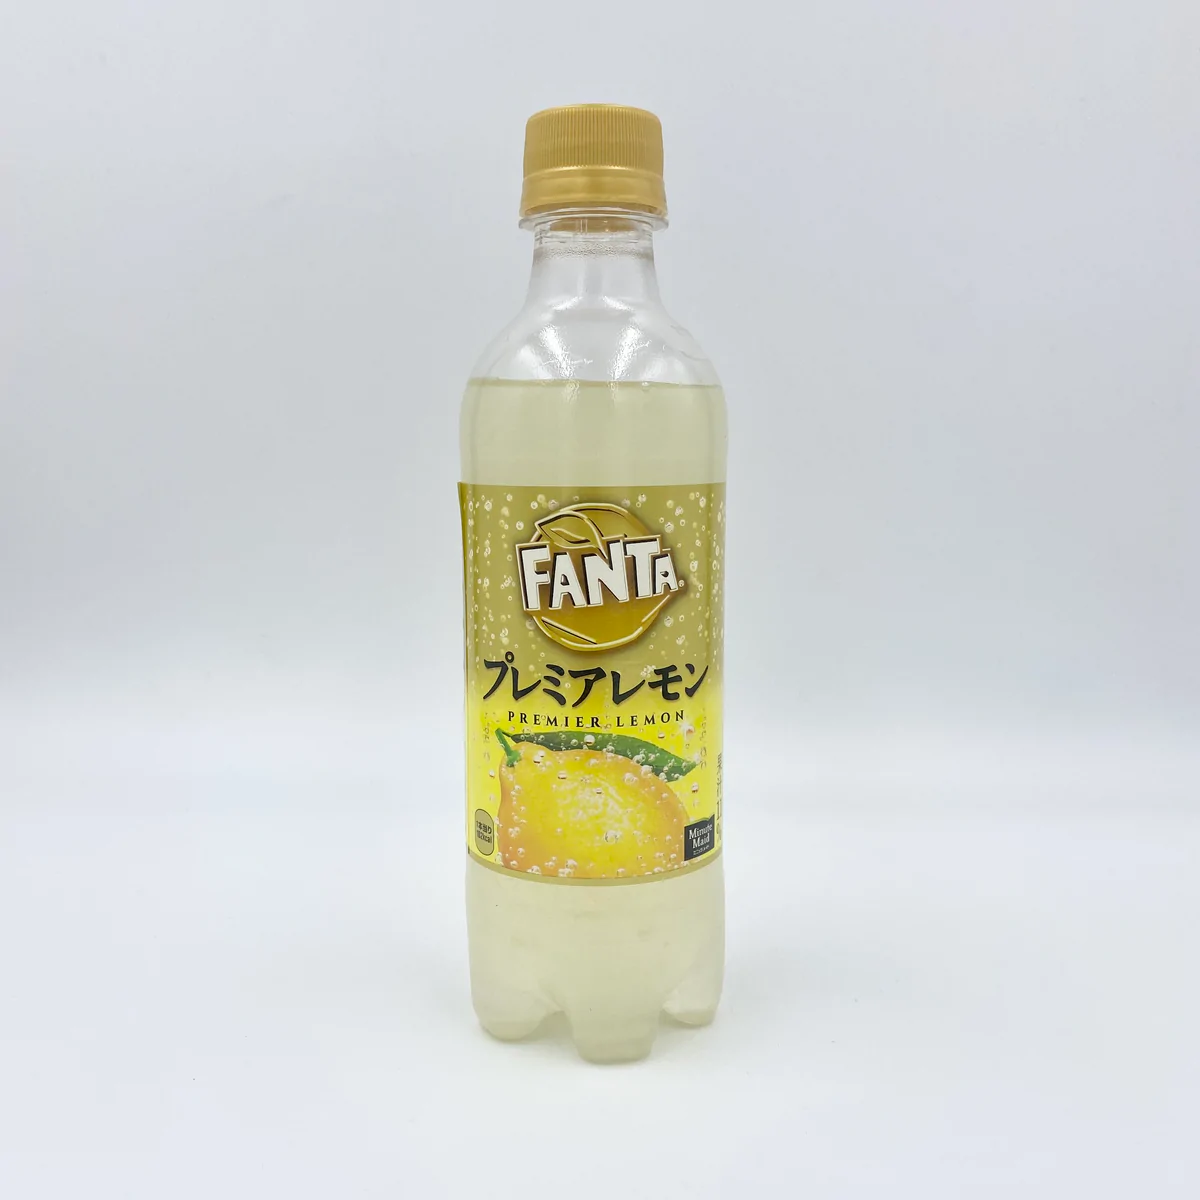 Fanta Premier Lemon